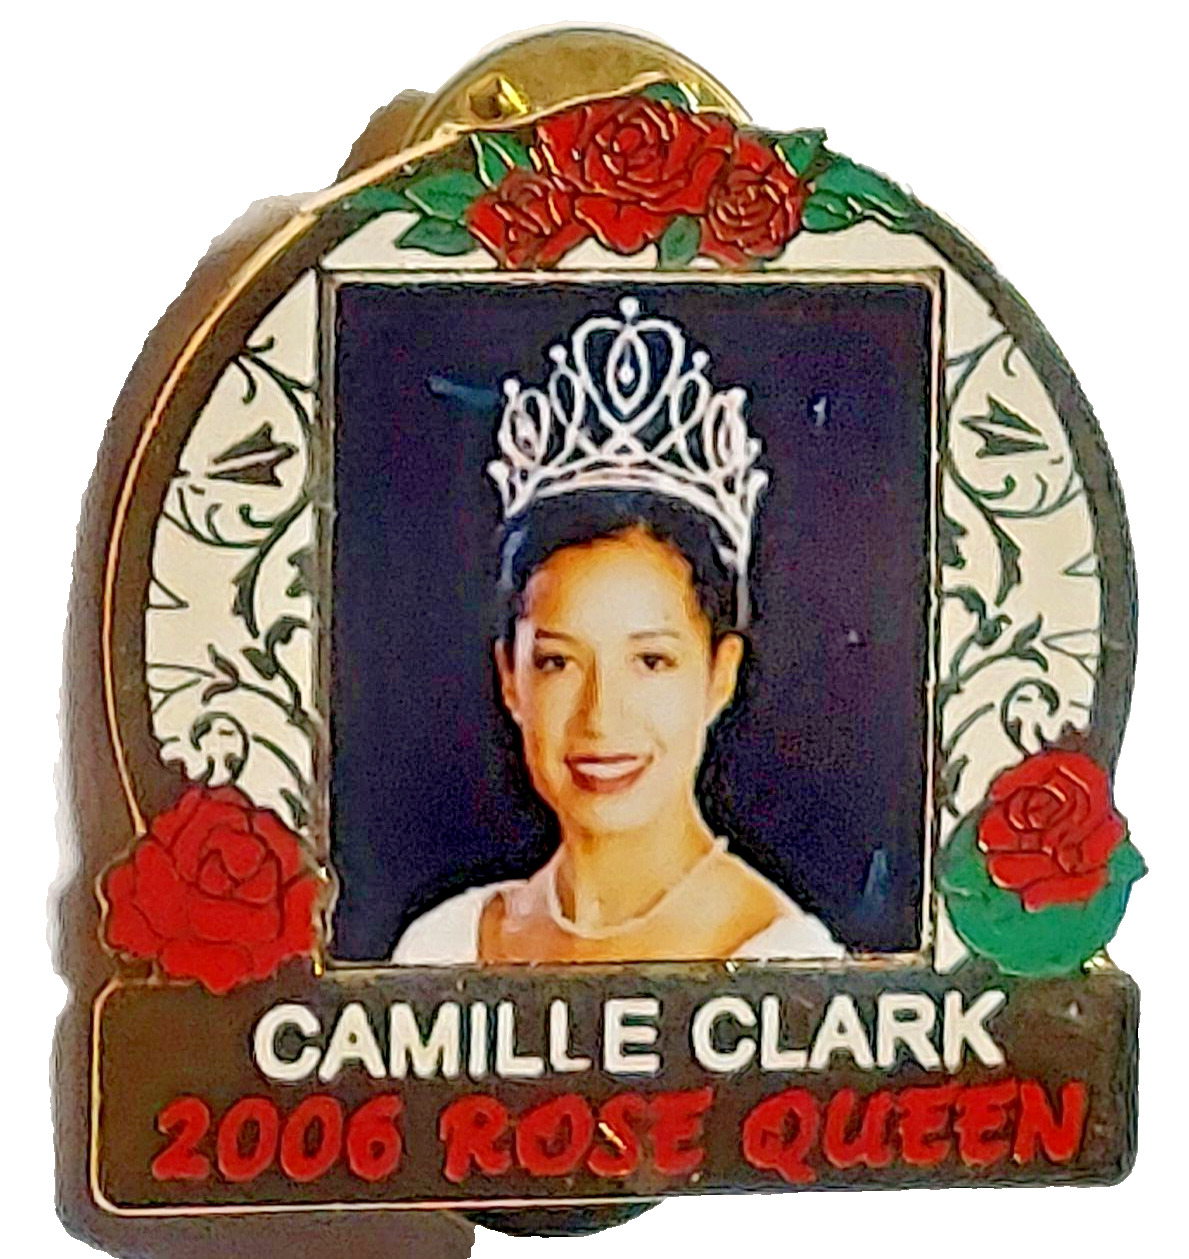 Rose Parade 2006 Rose Queen Camille Clark 117th Tournament of Roses Lapel Pin